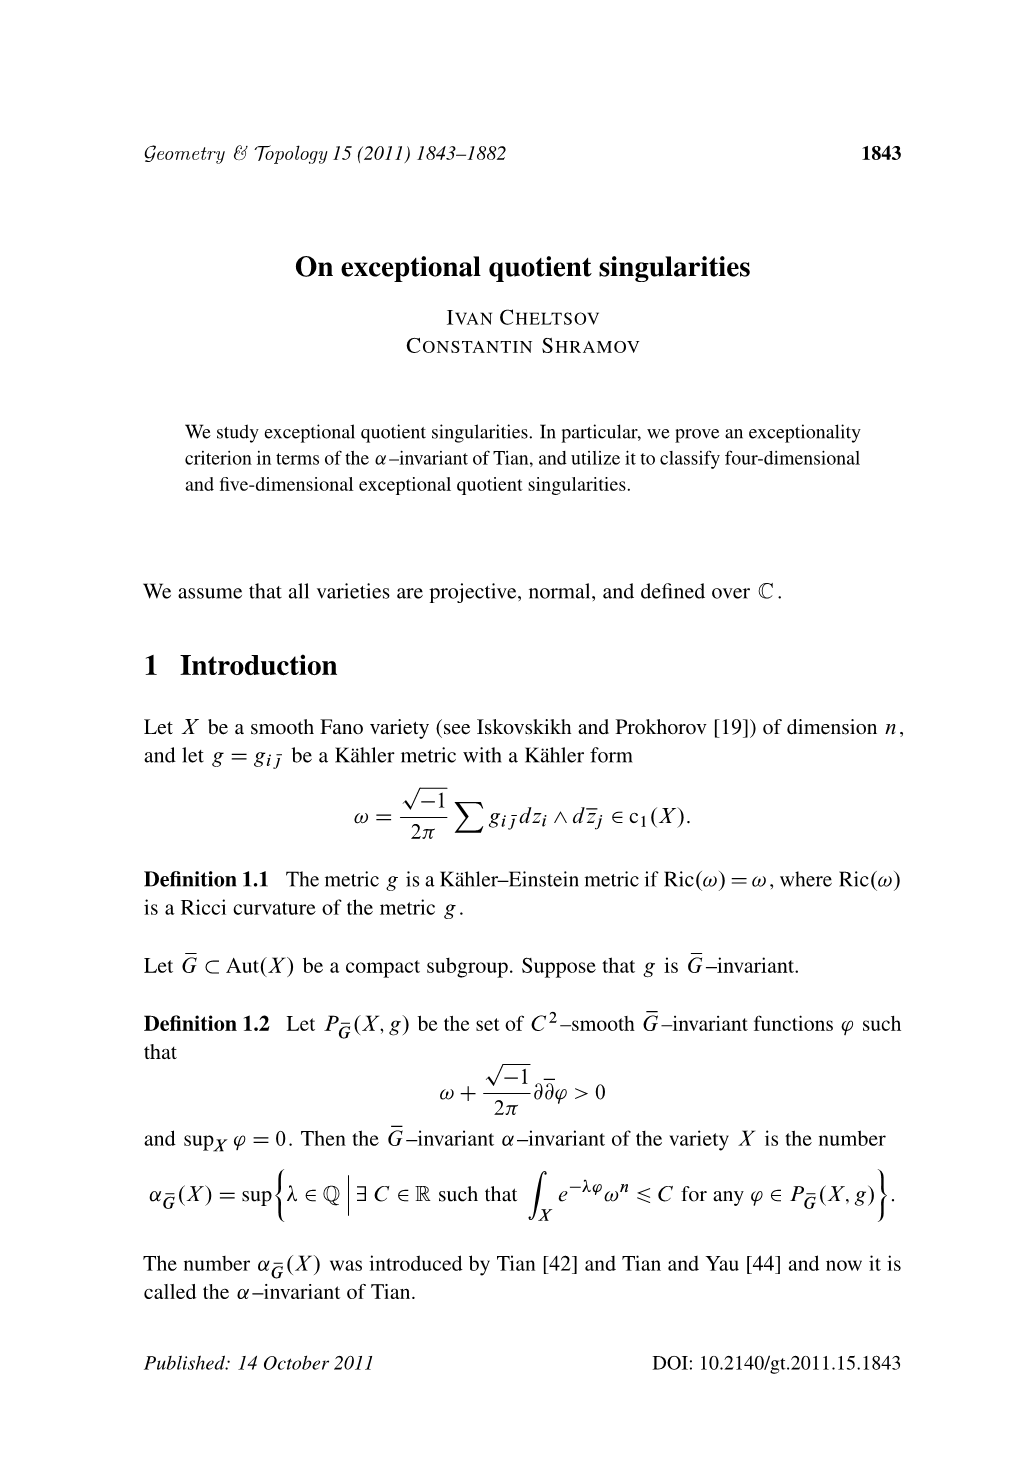 On Exceptional Quotient Singularities